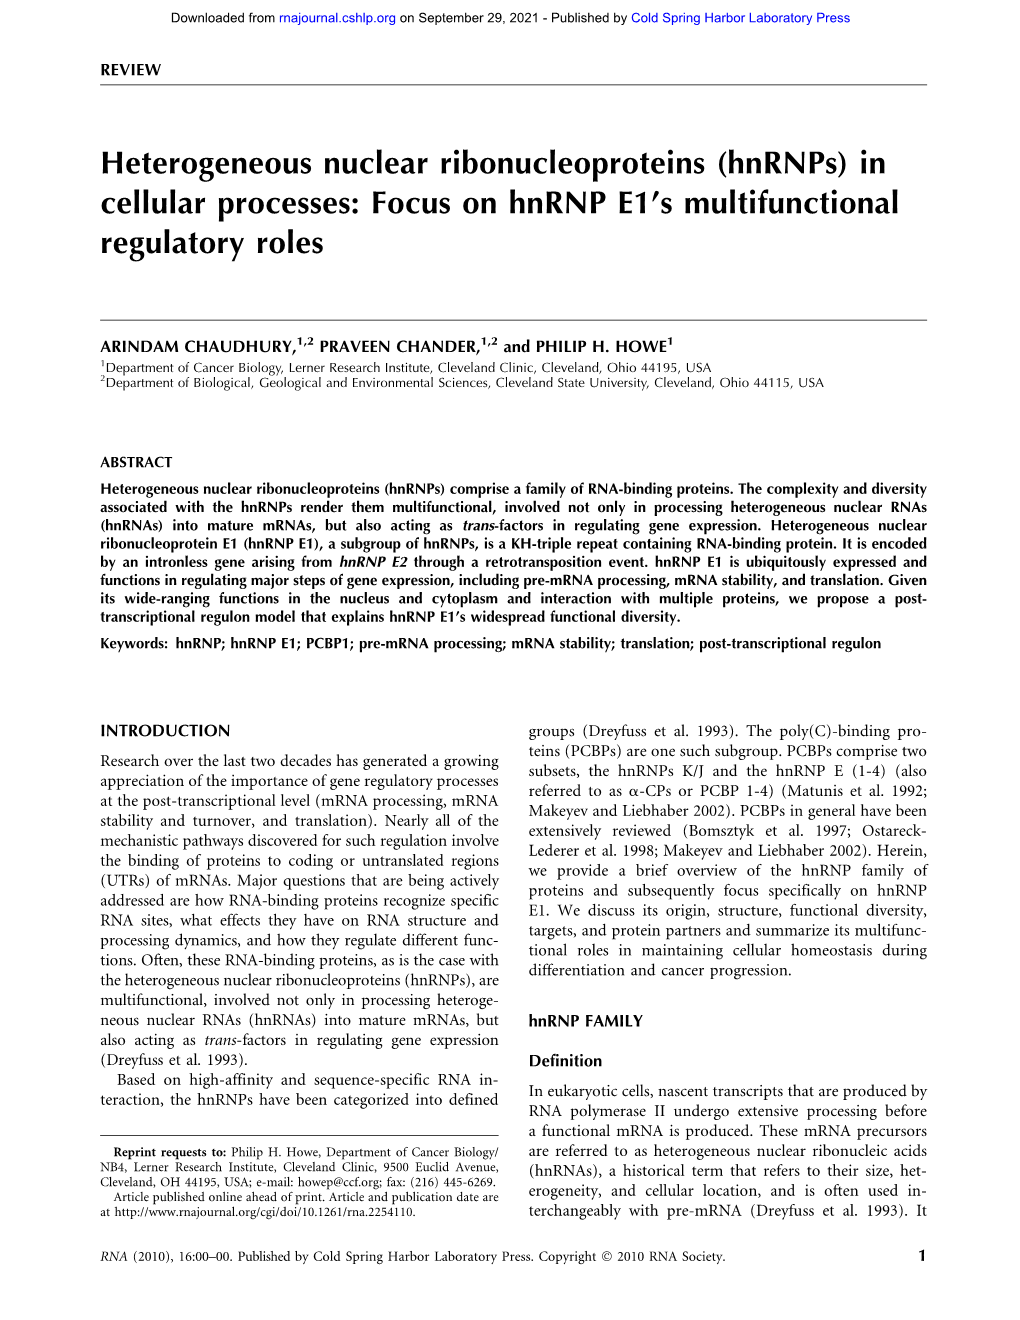 (Hnrnps) in Cellular Processes: Focus on Hnrnp E1's Multifunctional Regulatory Roles